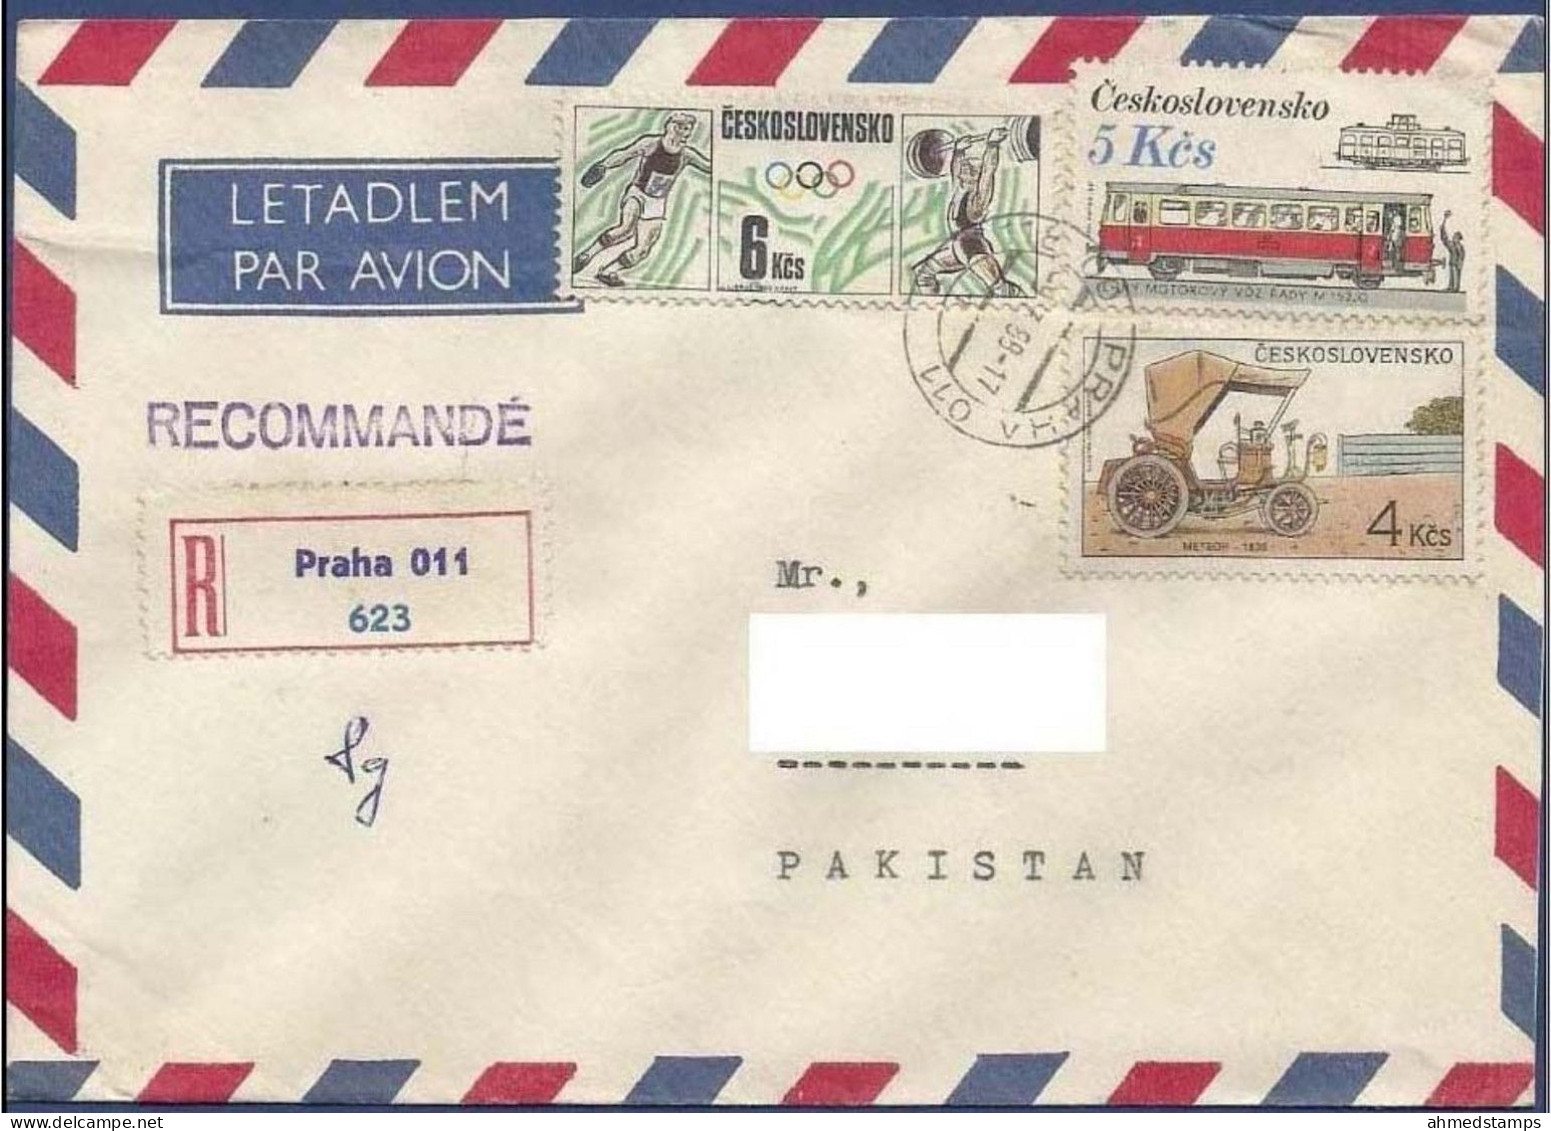 CZECHOSLOVAKIA REGISTERED 1988  POSTAL USED AIRMAIL COVER TO PAKISTAN - Poste Aérienne